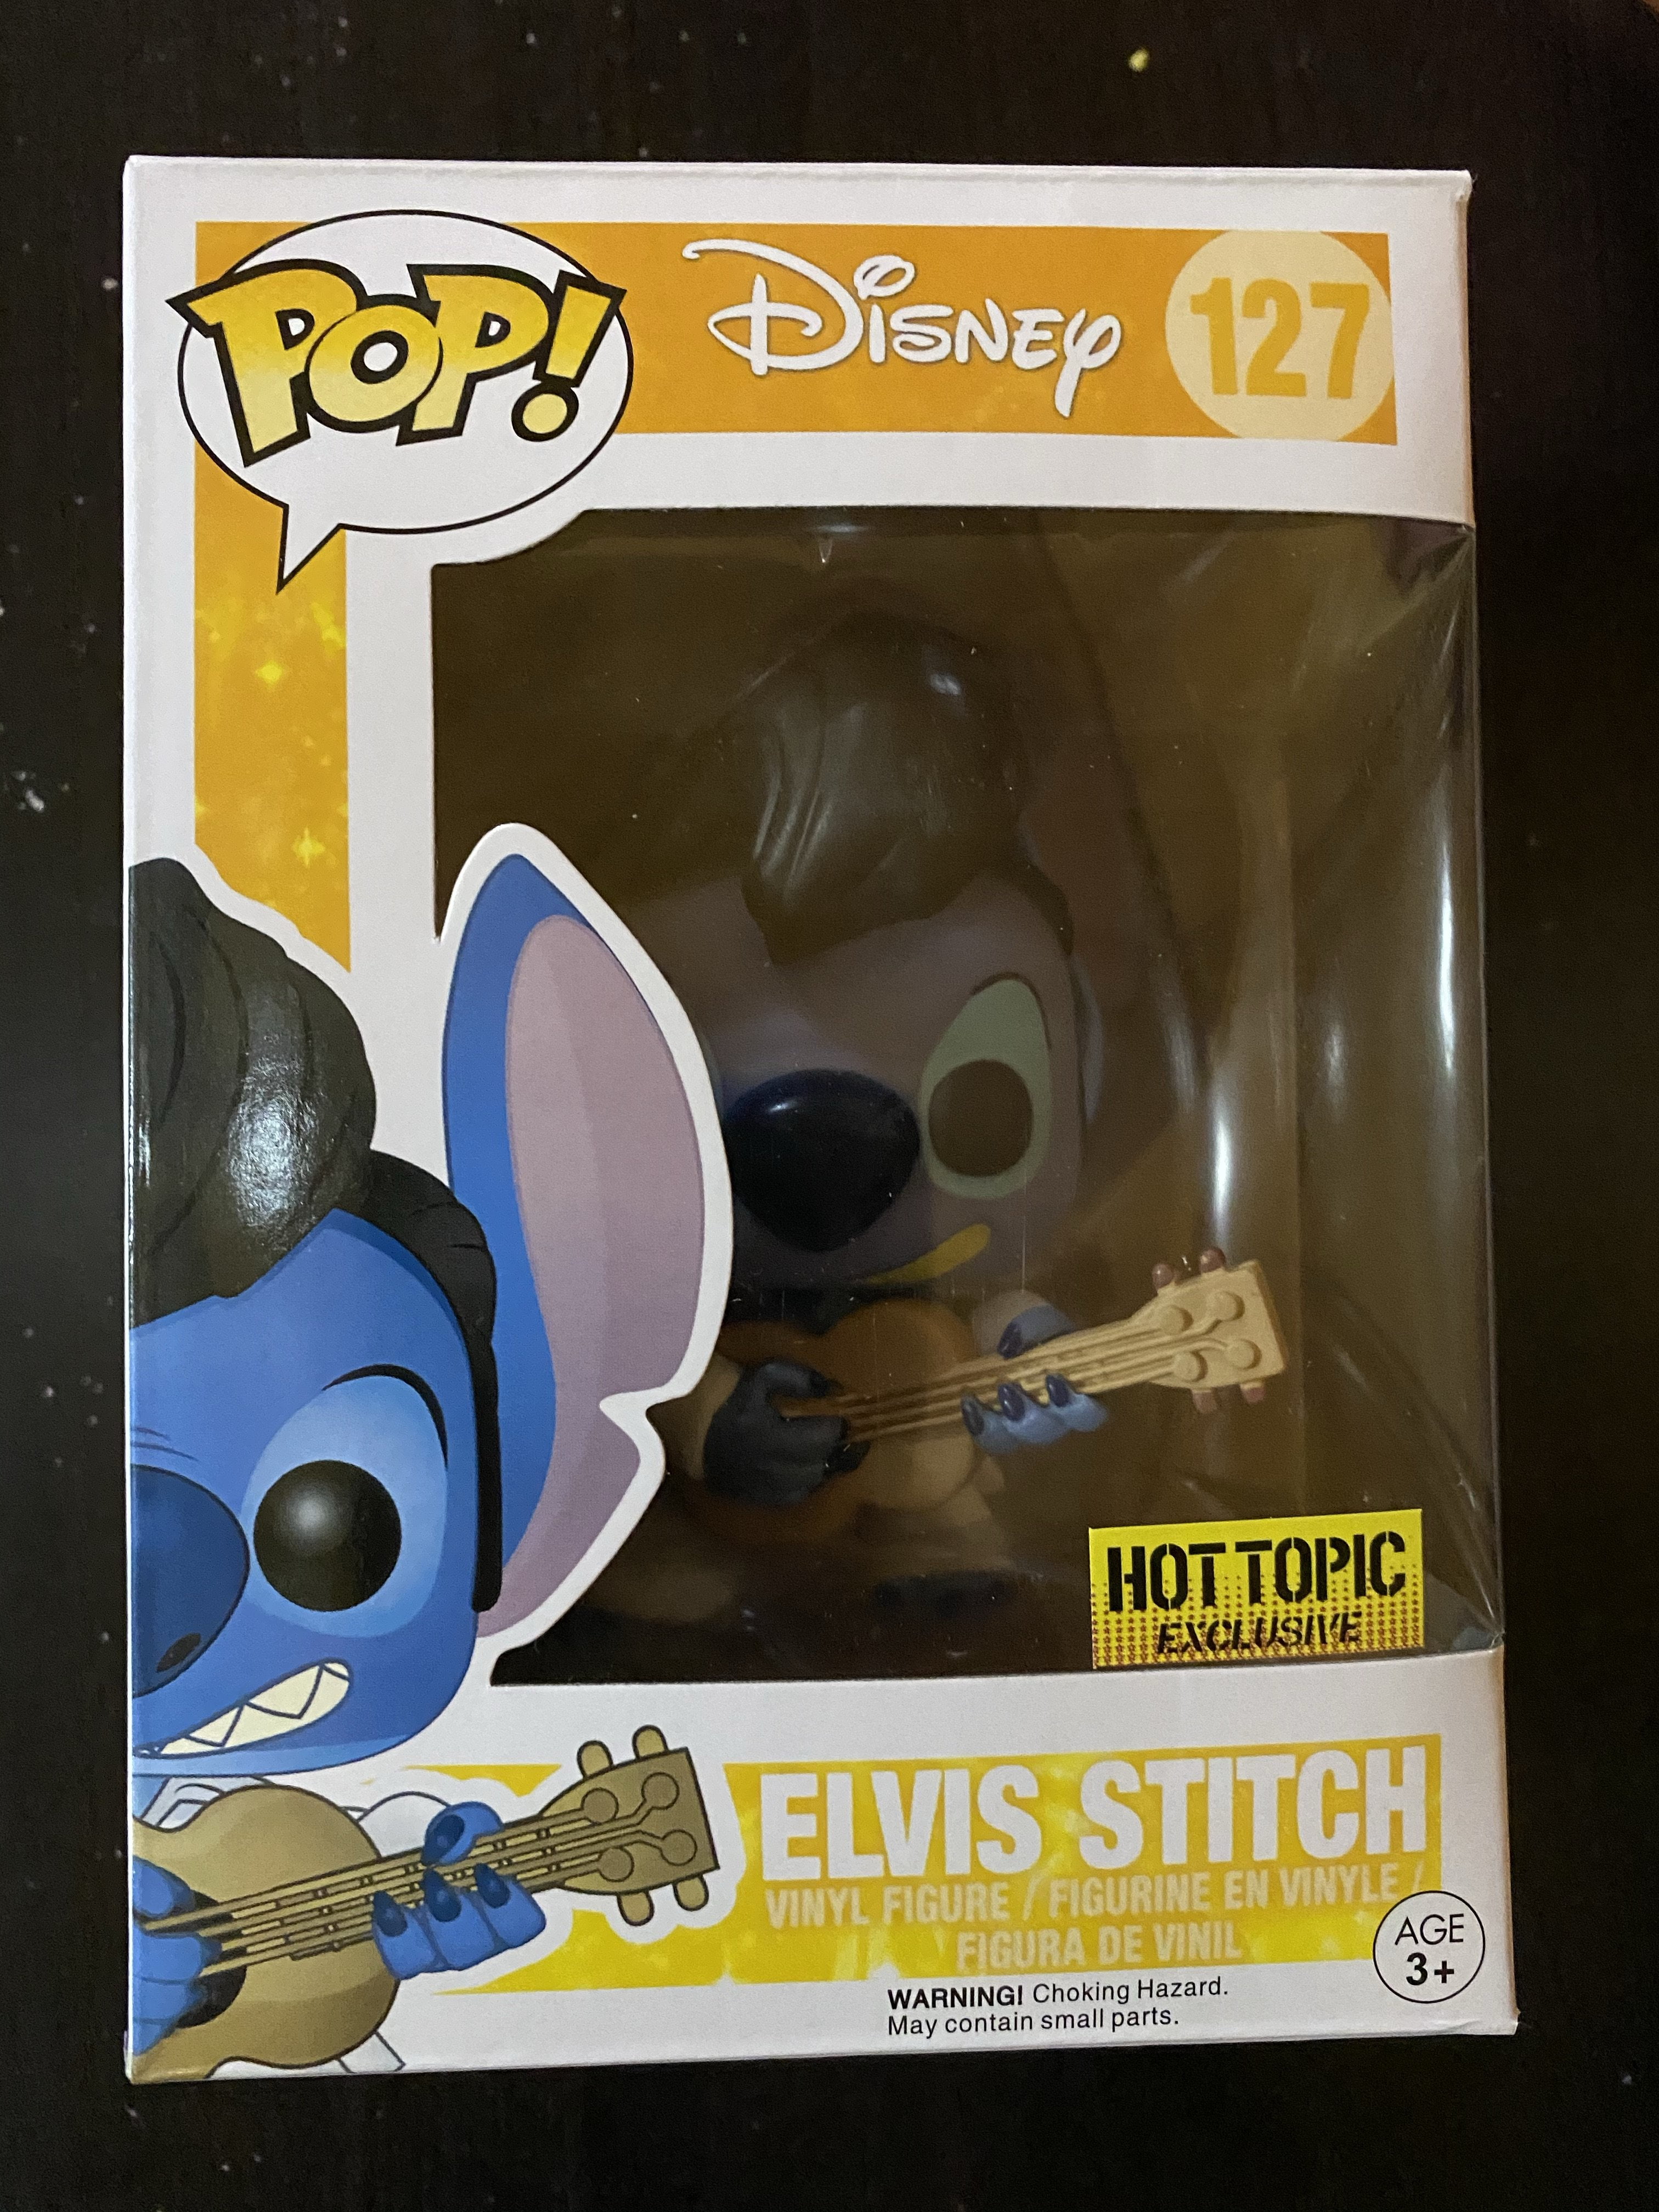 FUNKO POP Elvis Stitch Disney Figure Hot Topic #127 Exclusive Vinyl In Box Toy 